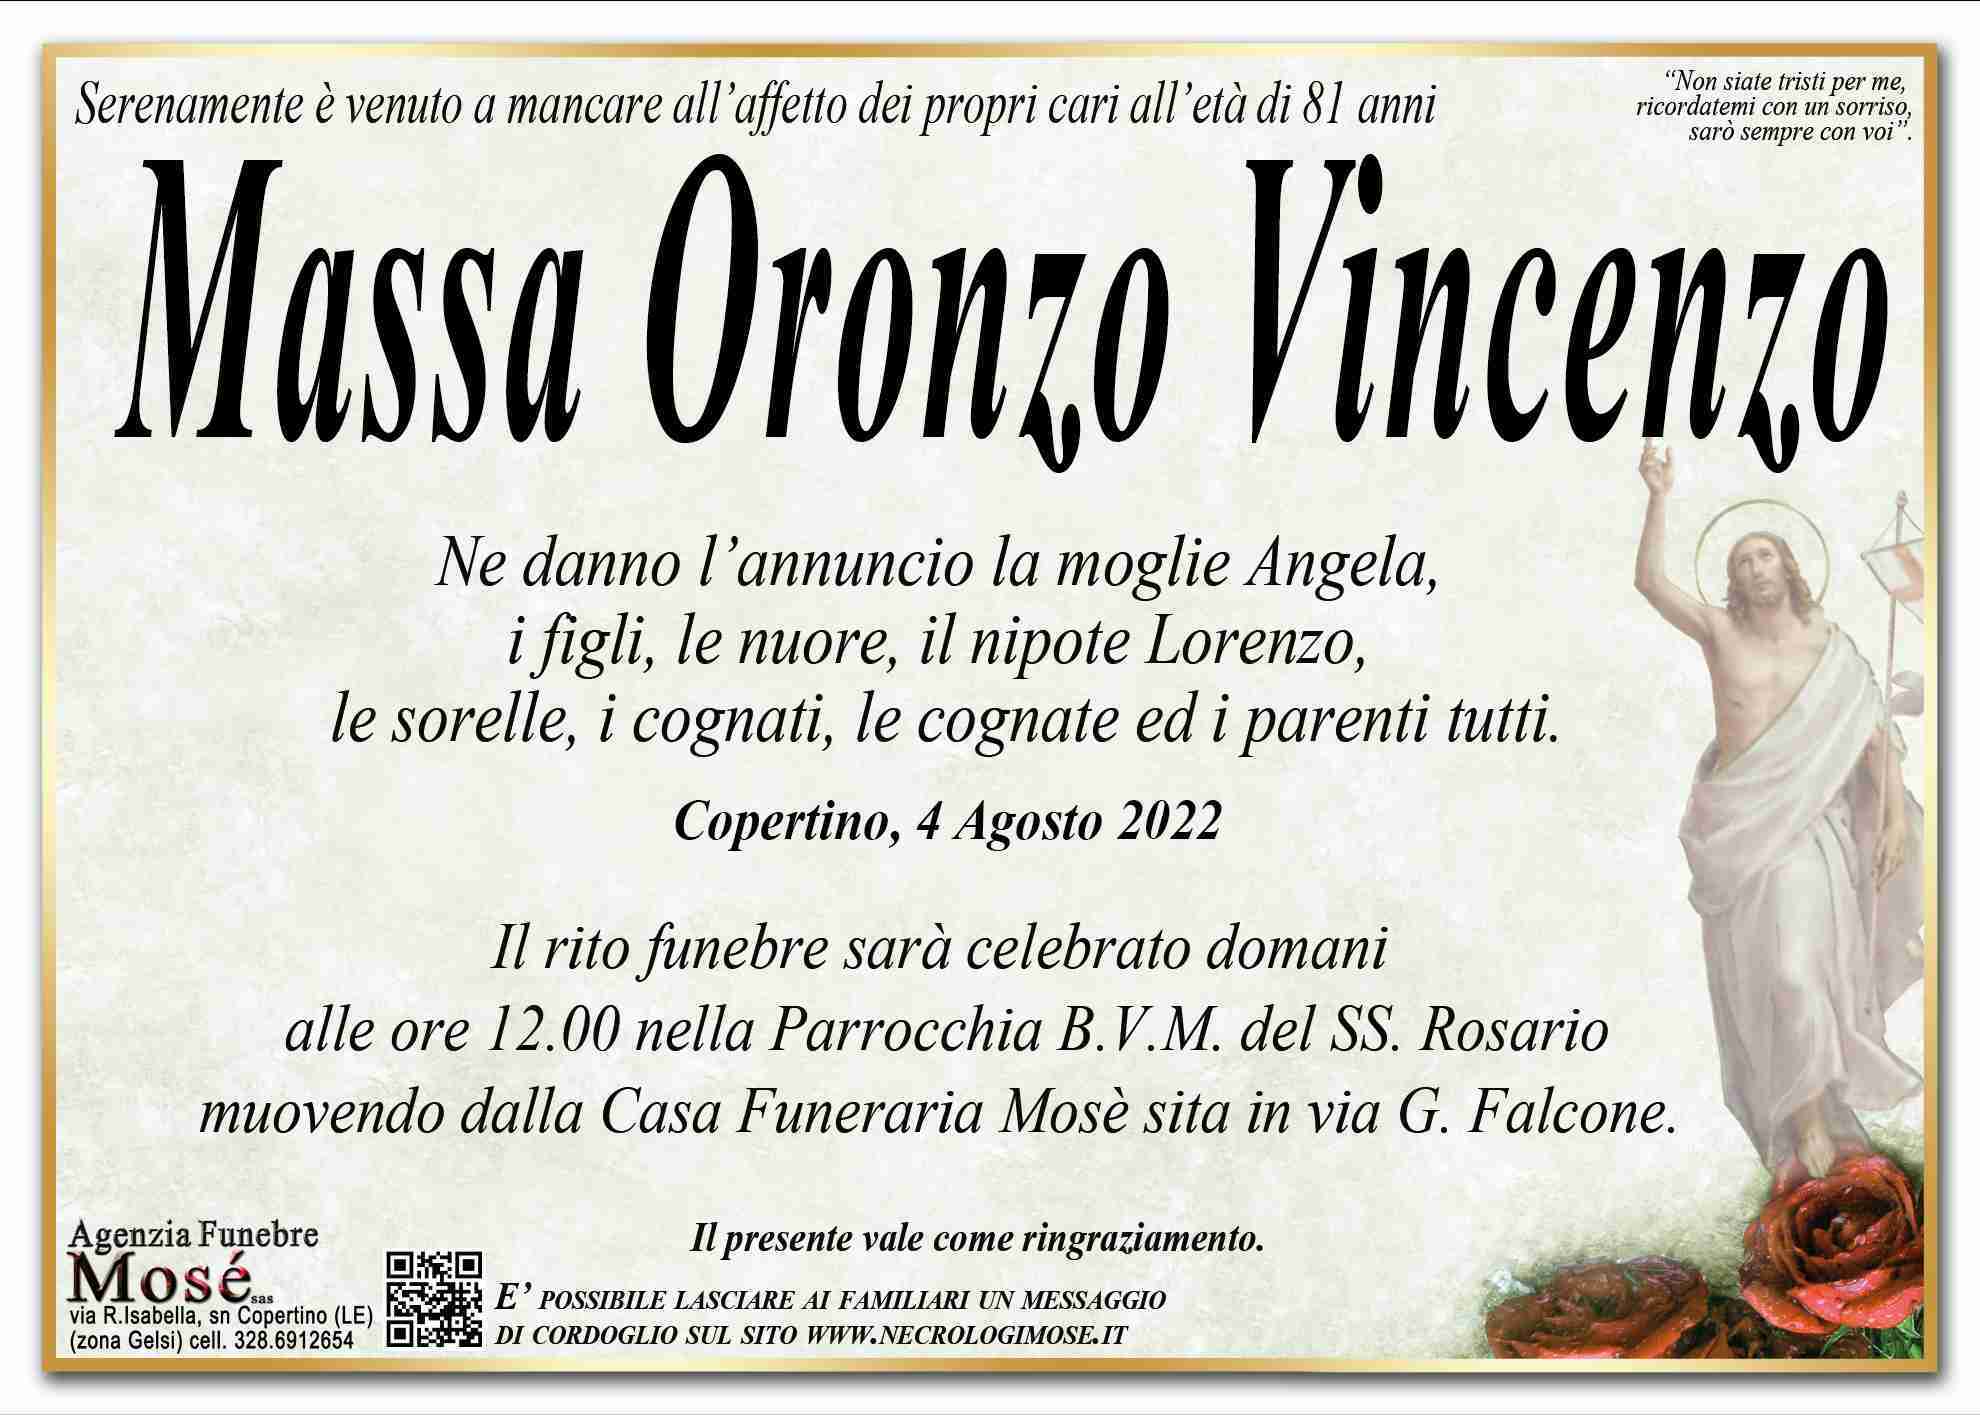 Oronzo Vincenzo Massa